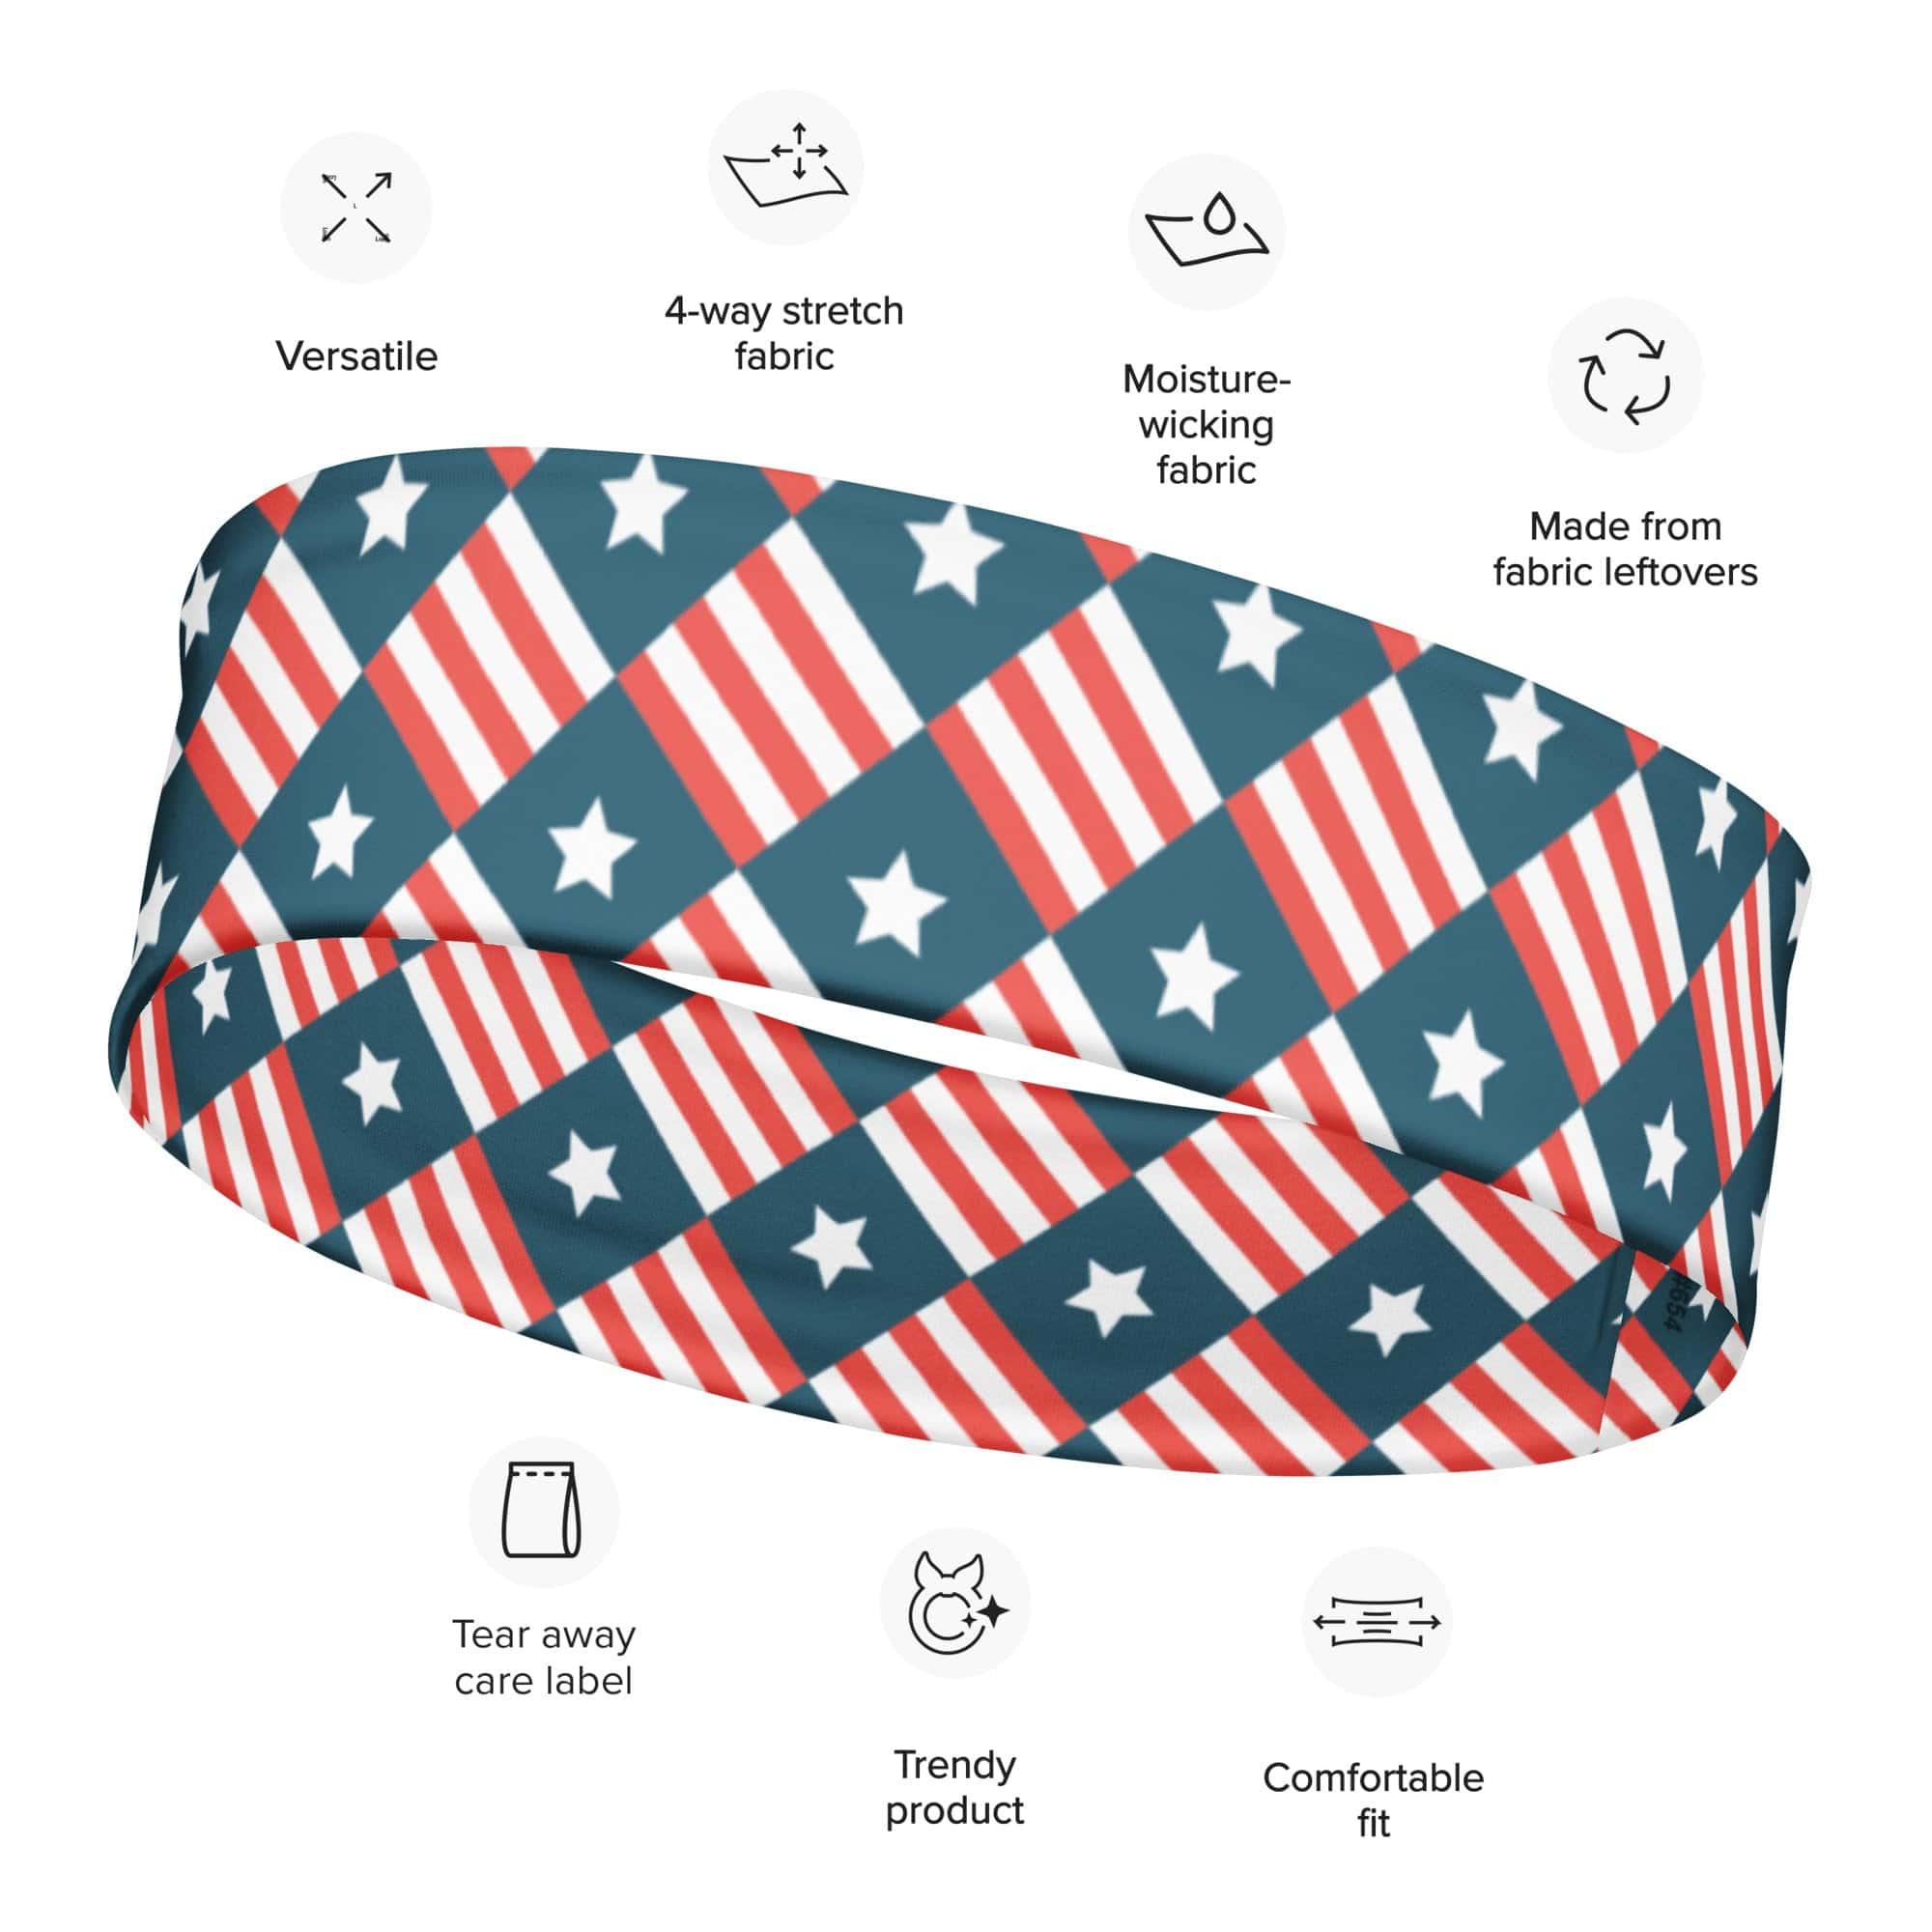 male headbands || America Stars & Stripes Quick Dry Head Tie - TopKoalaTee